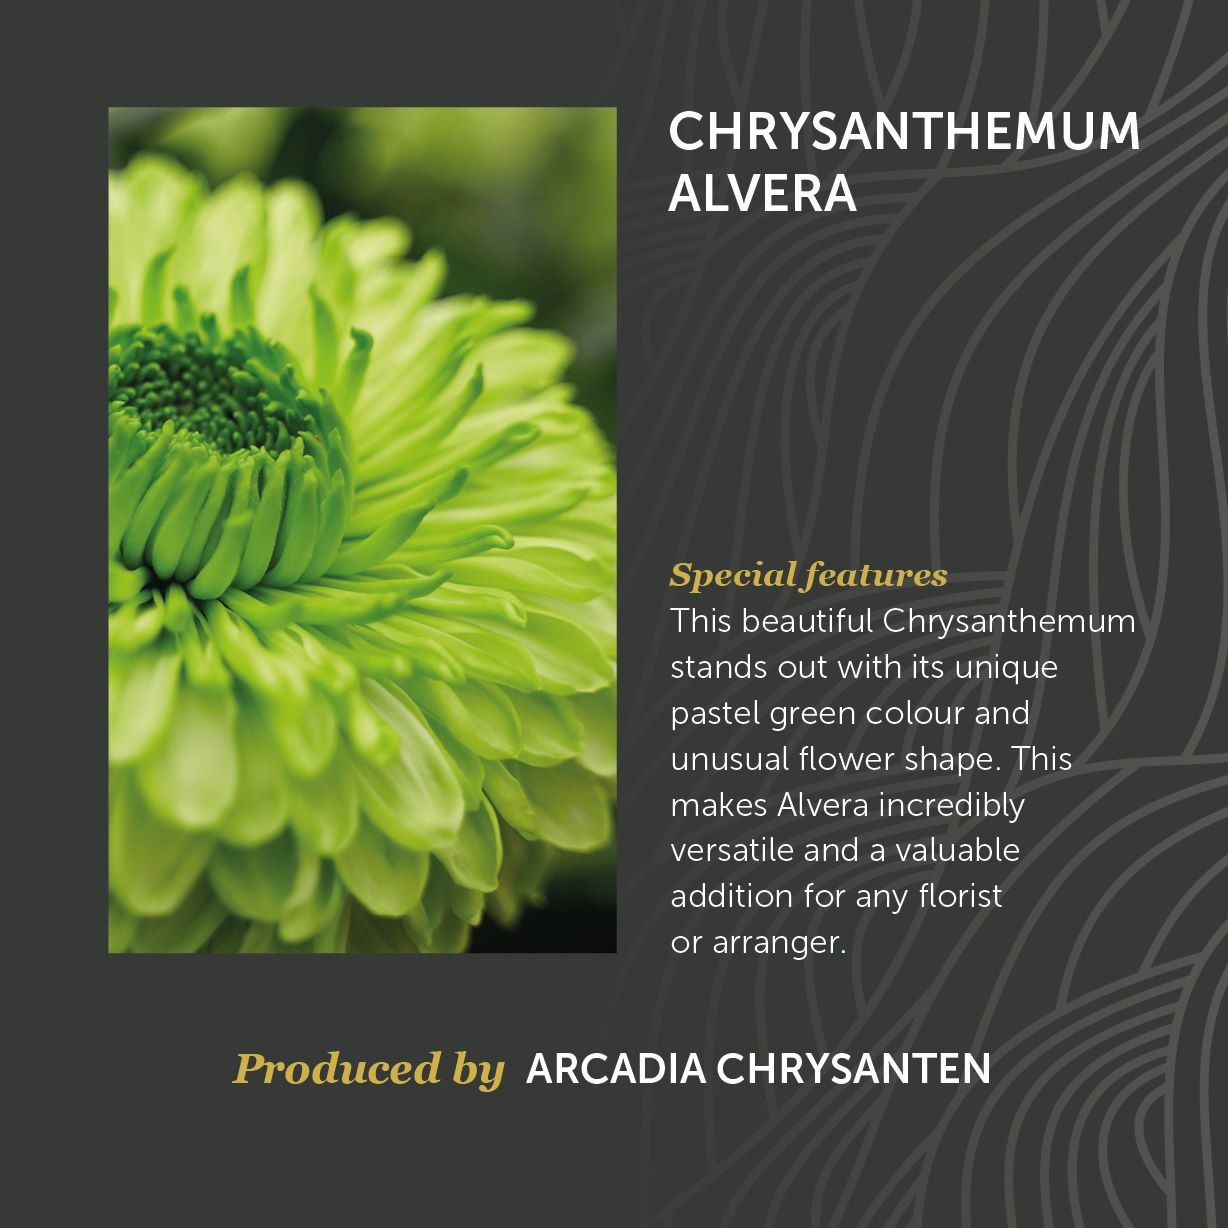 Chrysanthemum Alvera